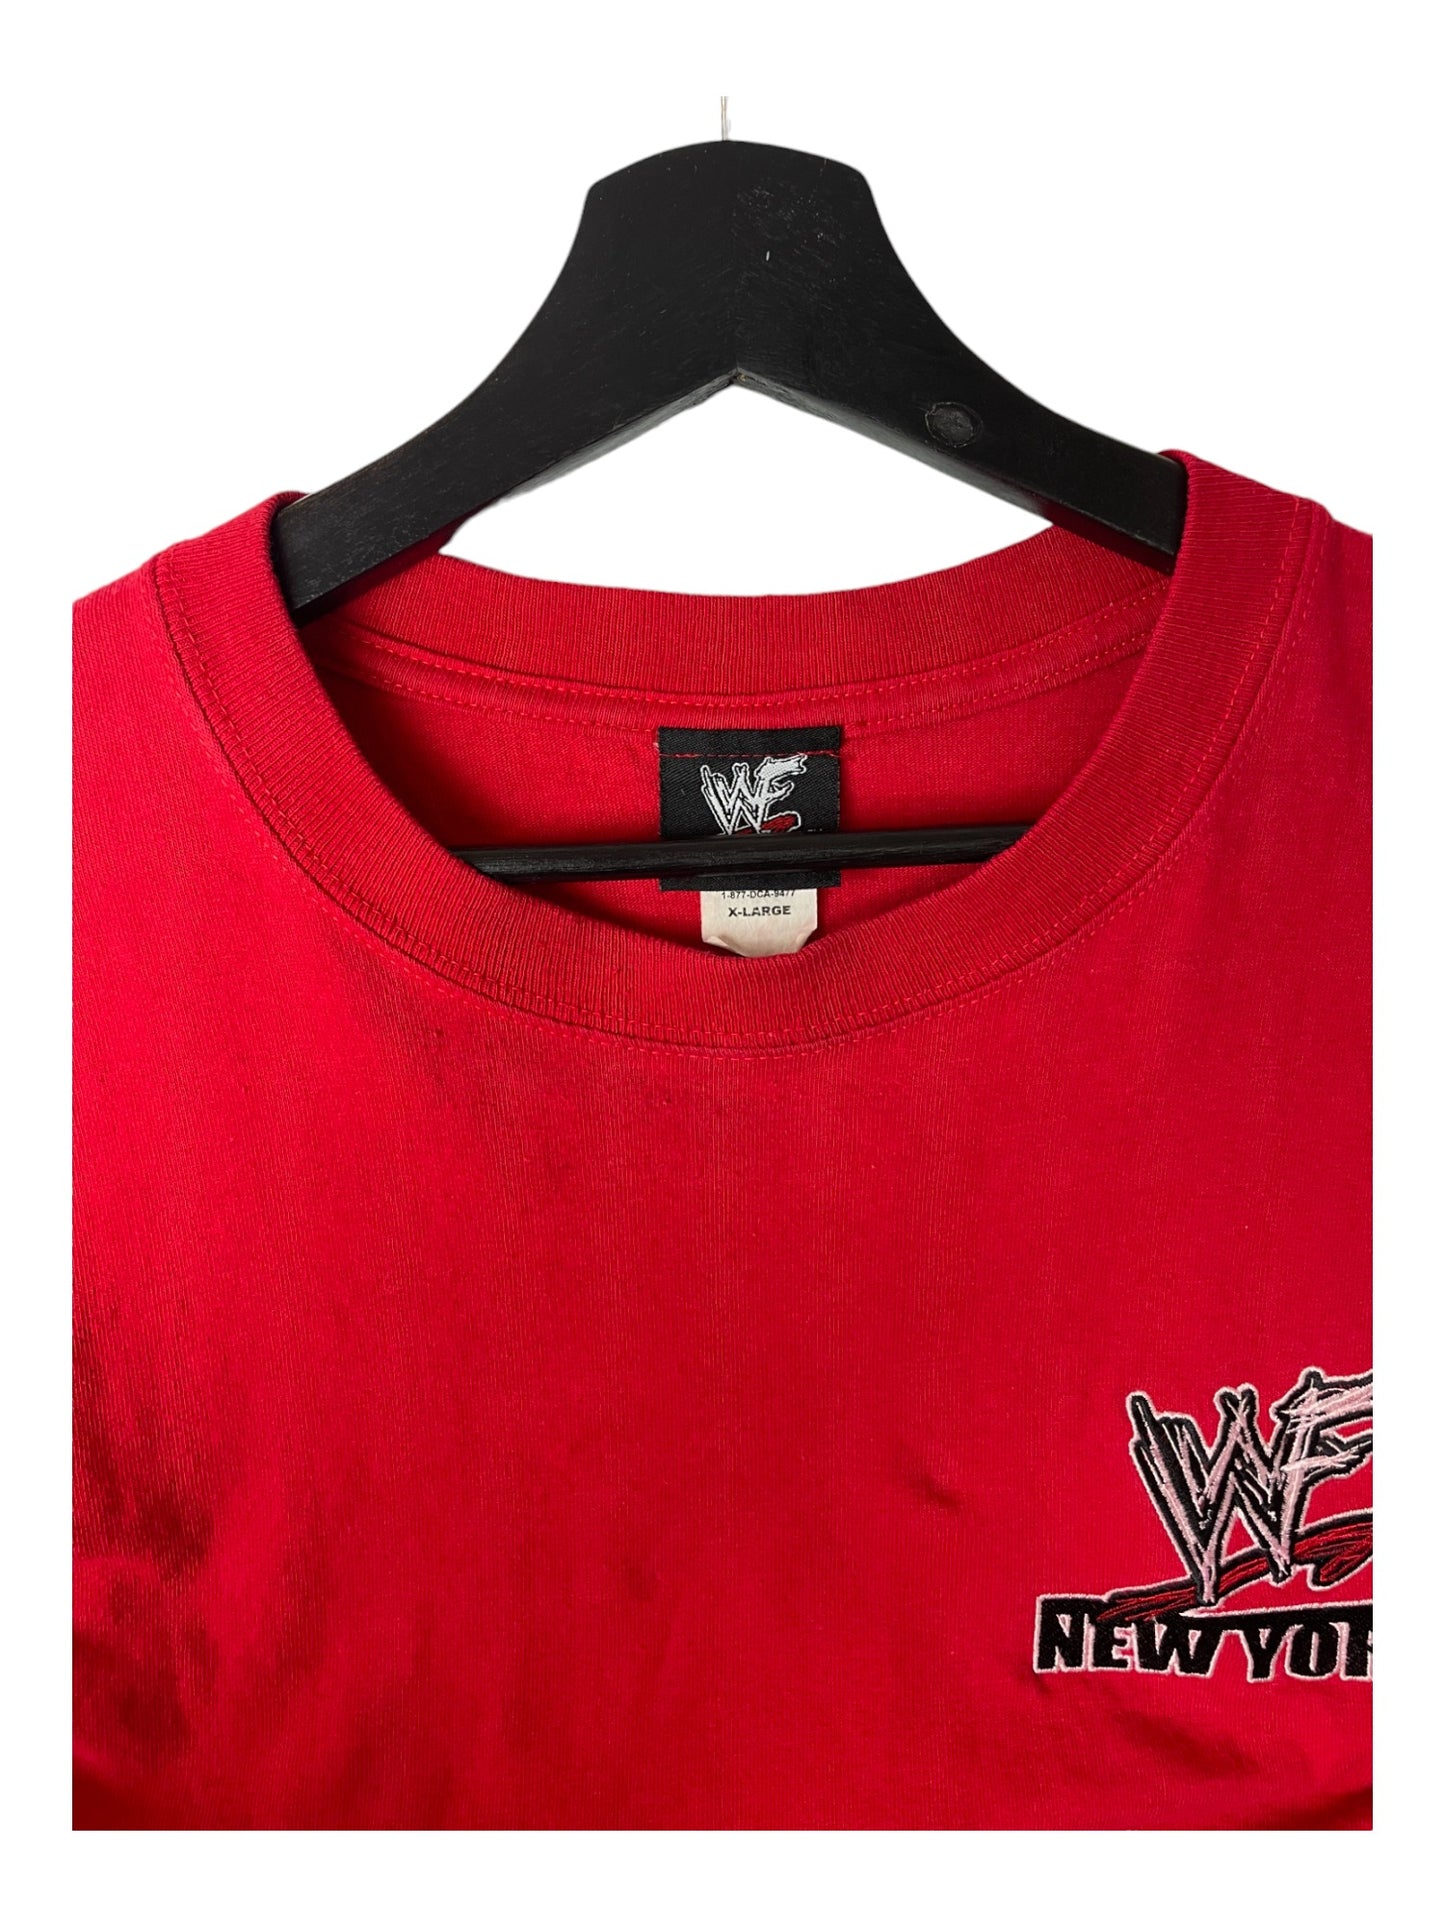 Tee Shirt WWF